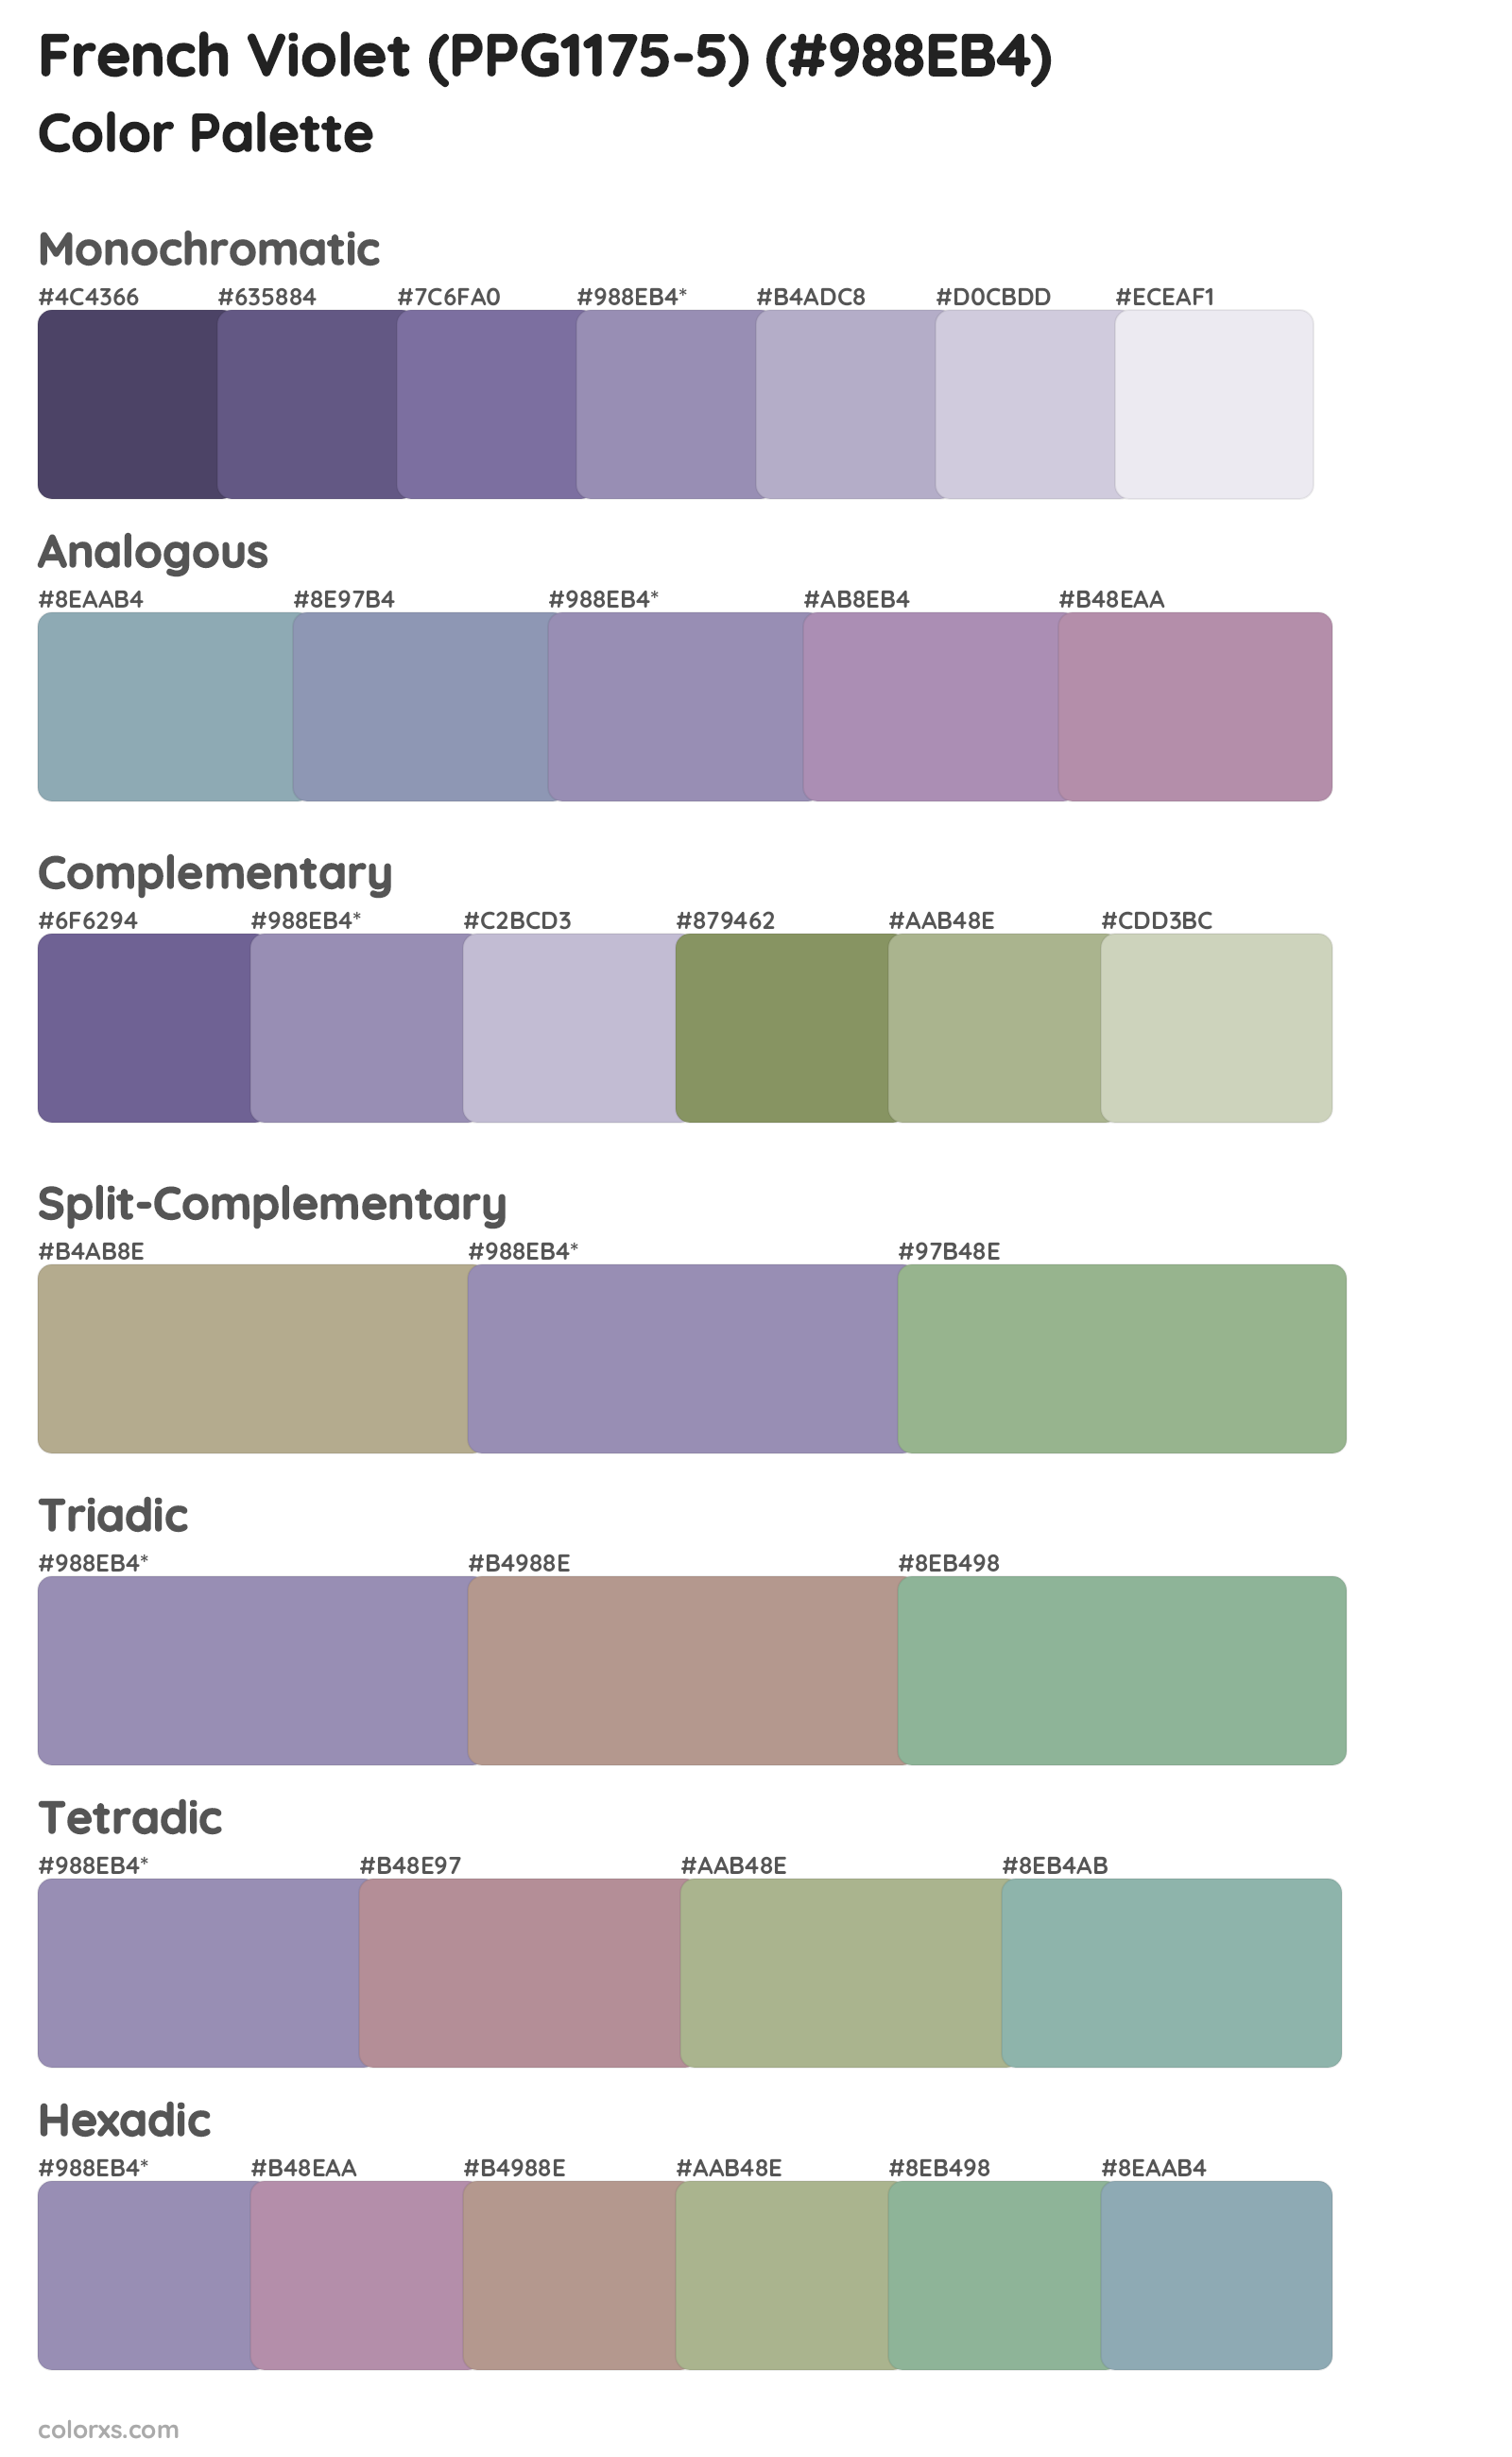 French Violet (PPG1175-5) Color Scheme Palettes